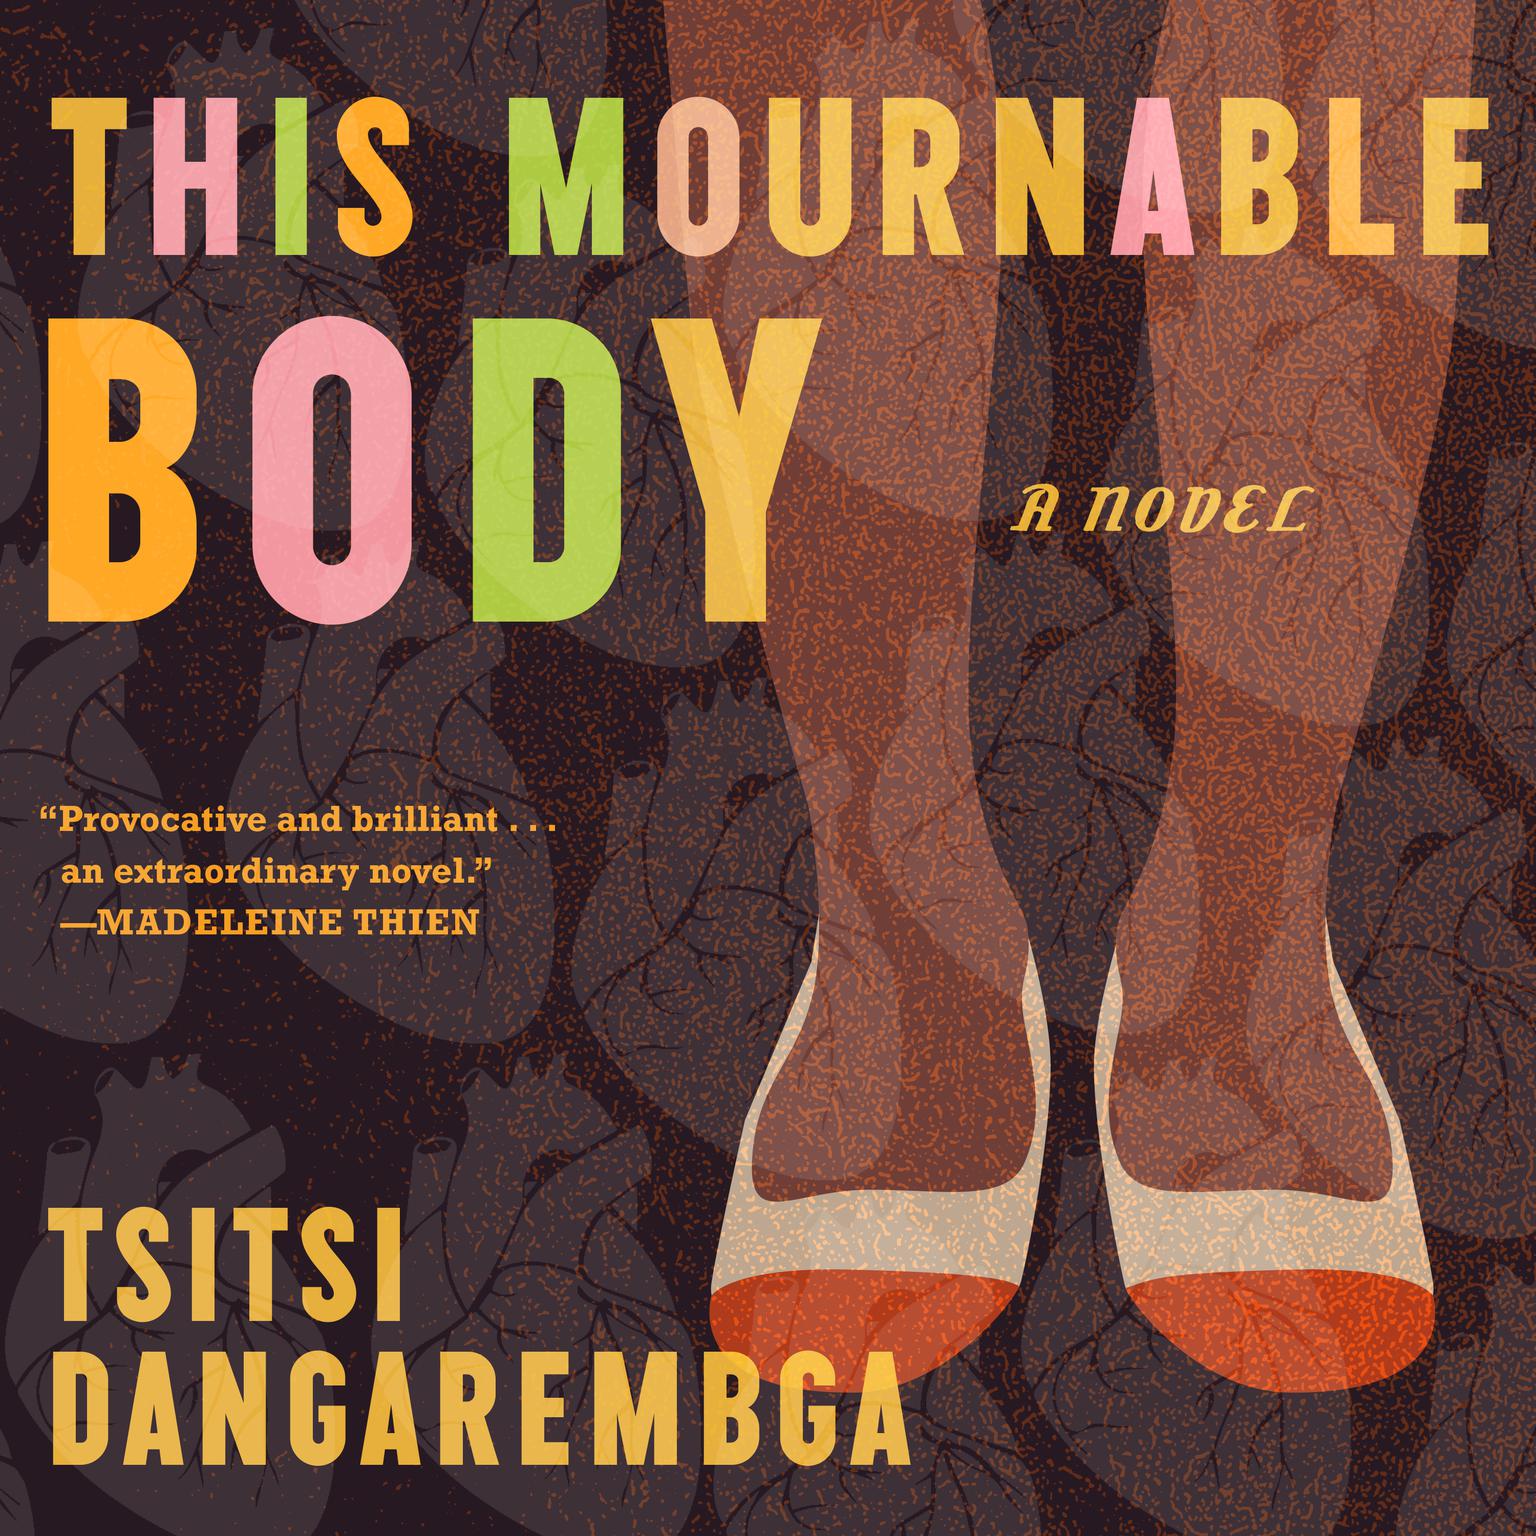 This Mournable Body: A Novel Audiobook, by Tsitsi Dangarembga